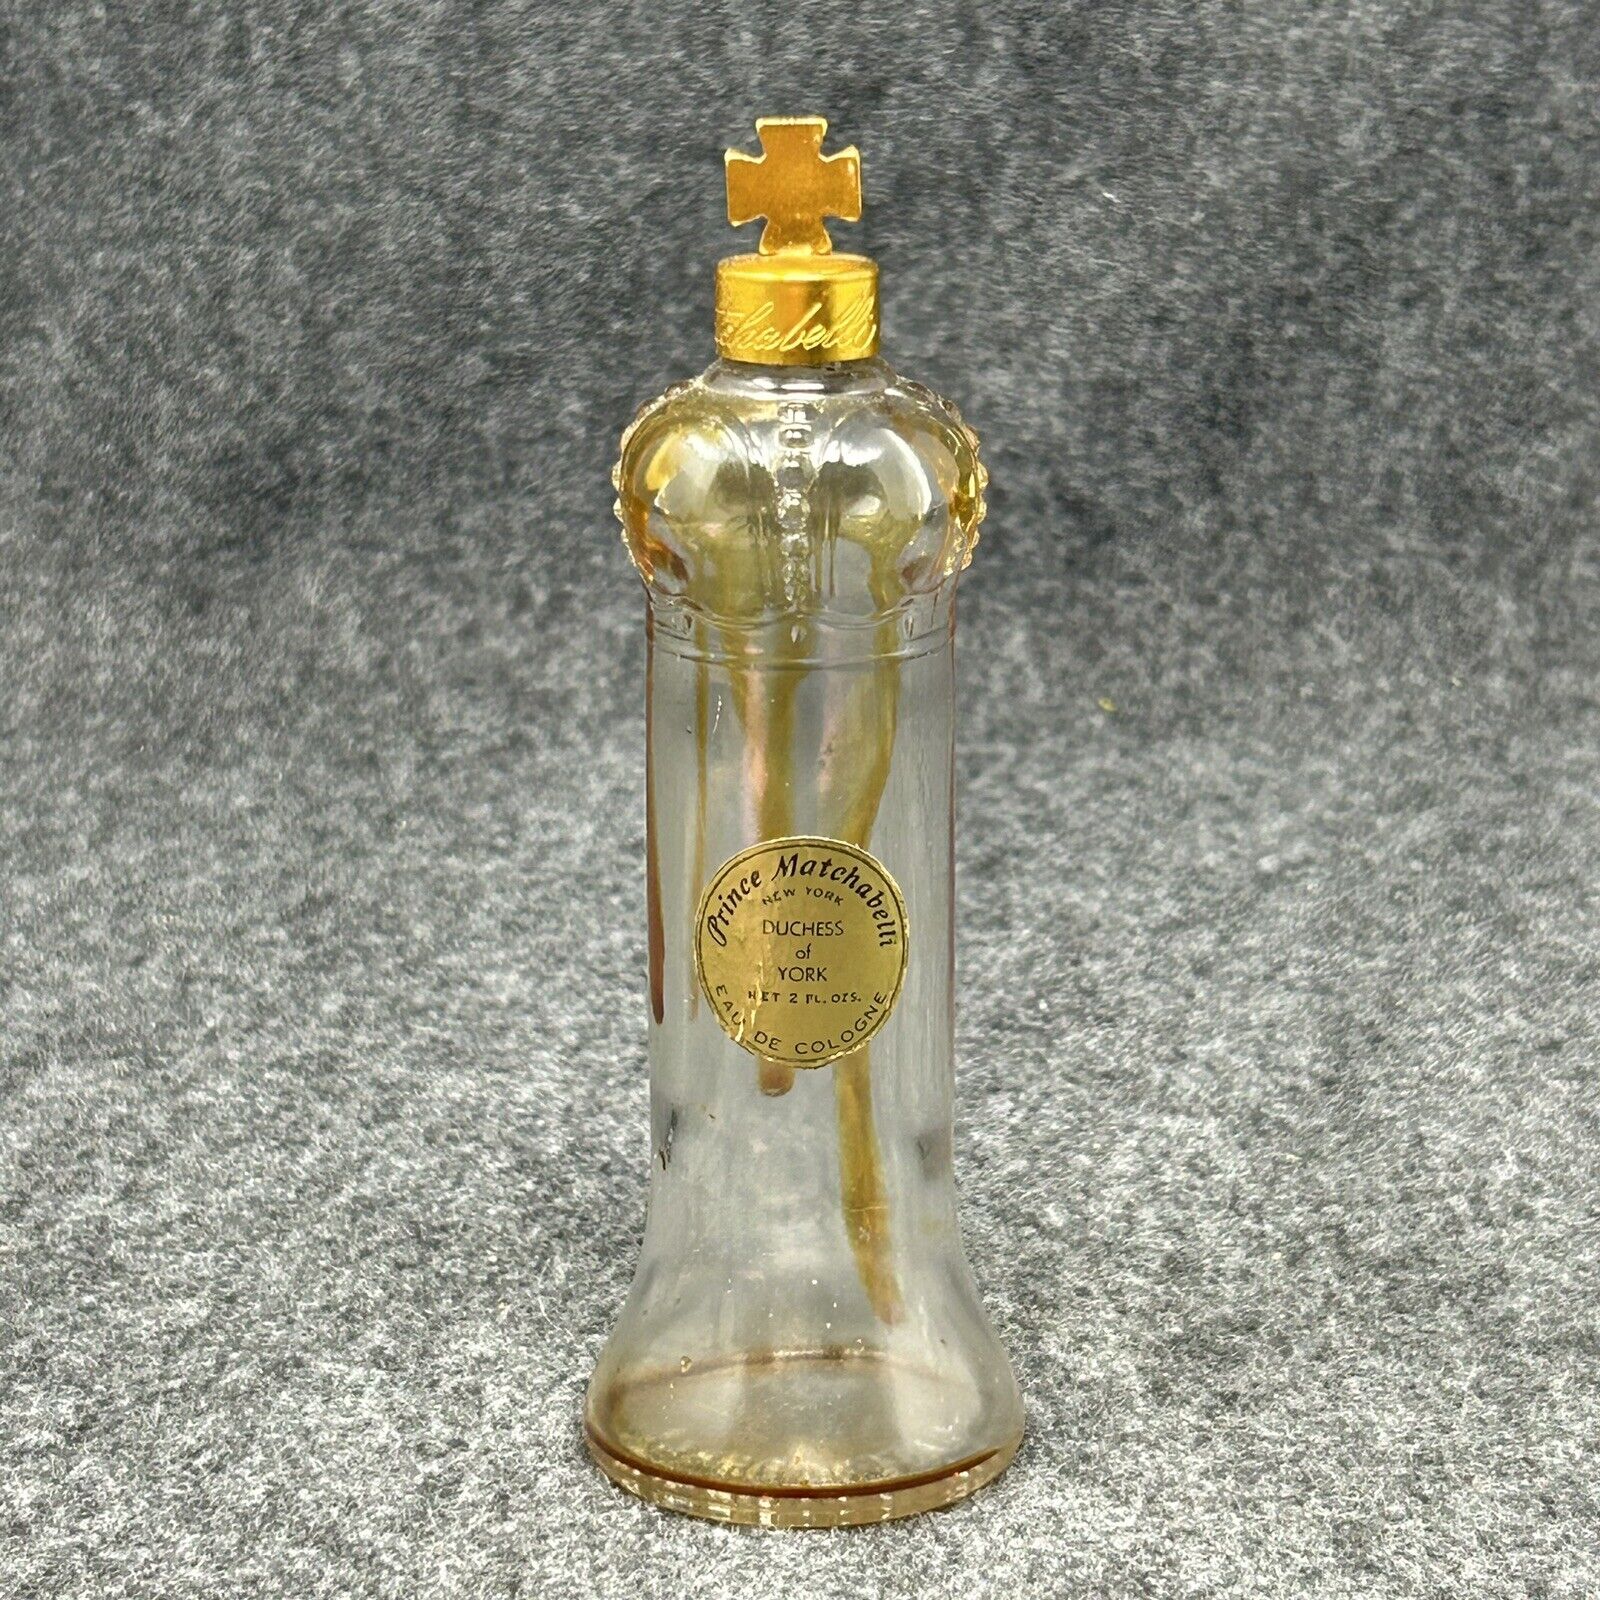 Prince Matchabelli Duchess of York Eau de Cologne Vintage Glass TALL Bottle Gold